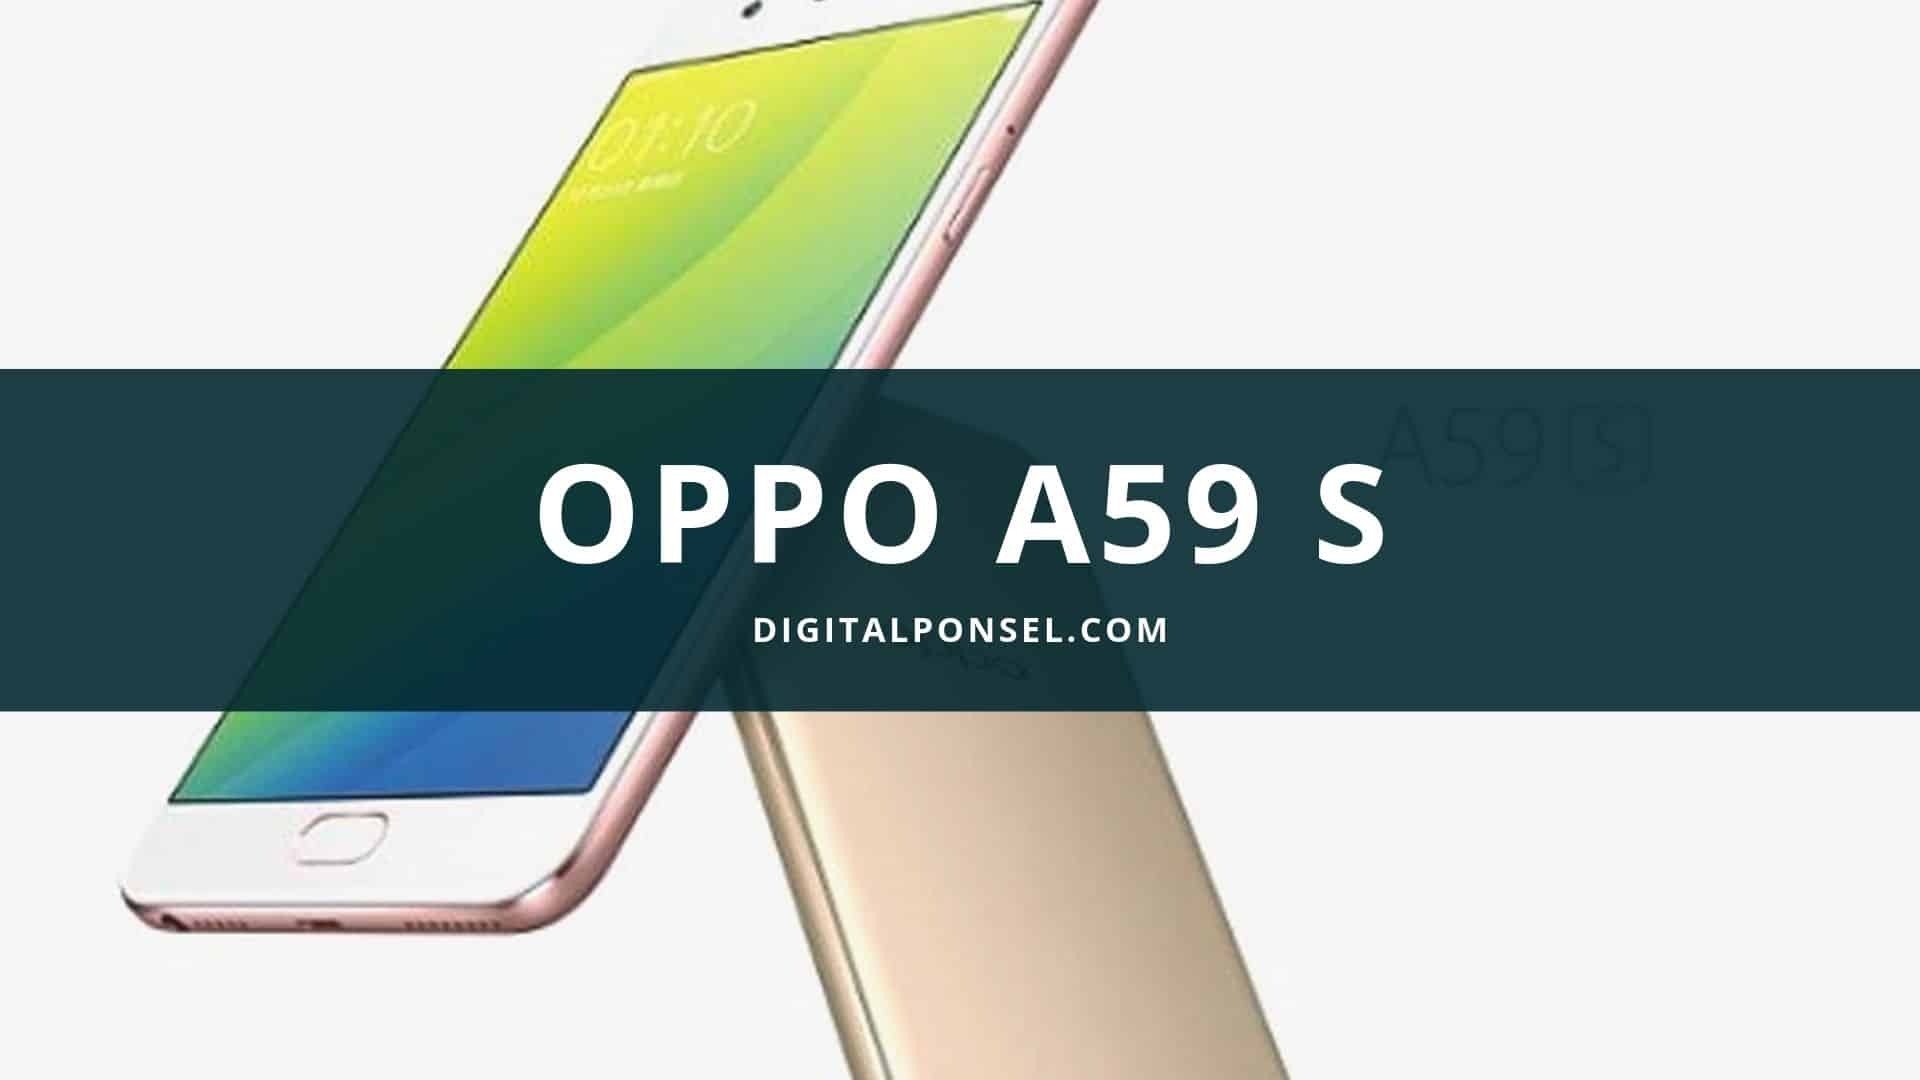 Oppo A59 S